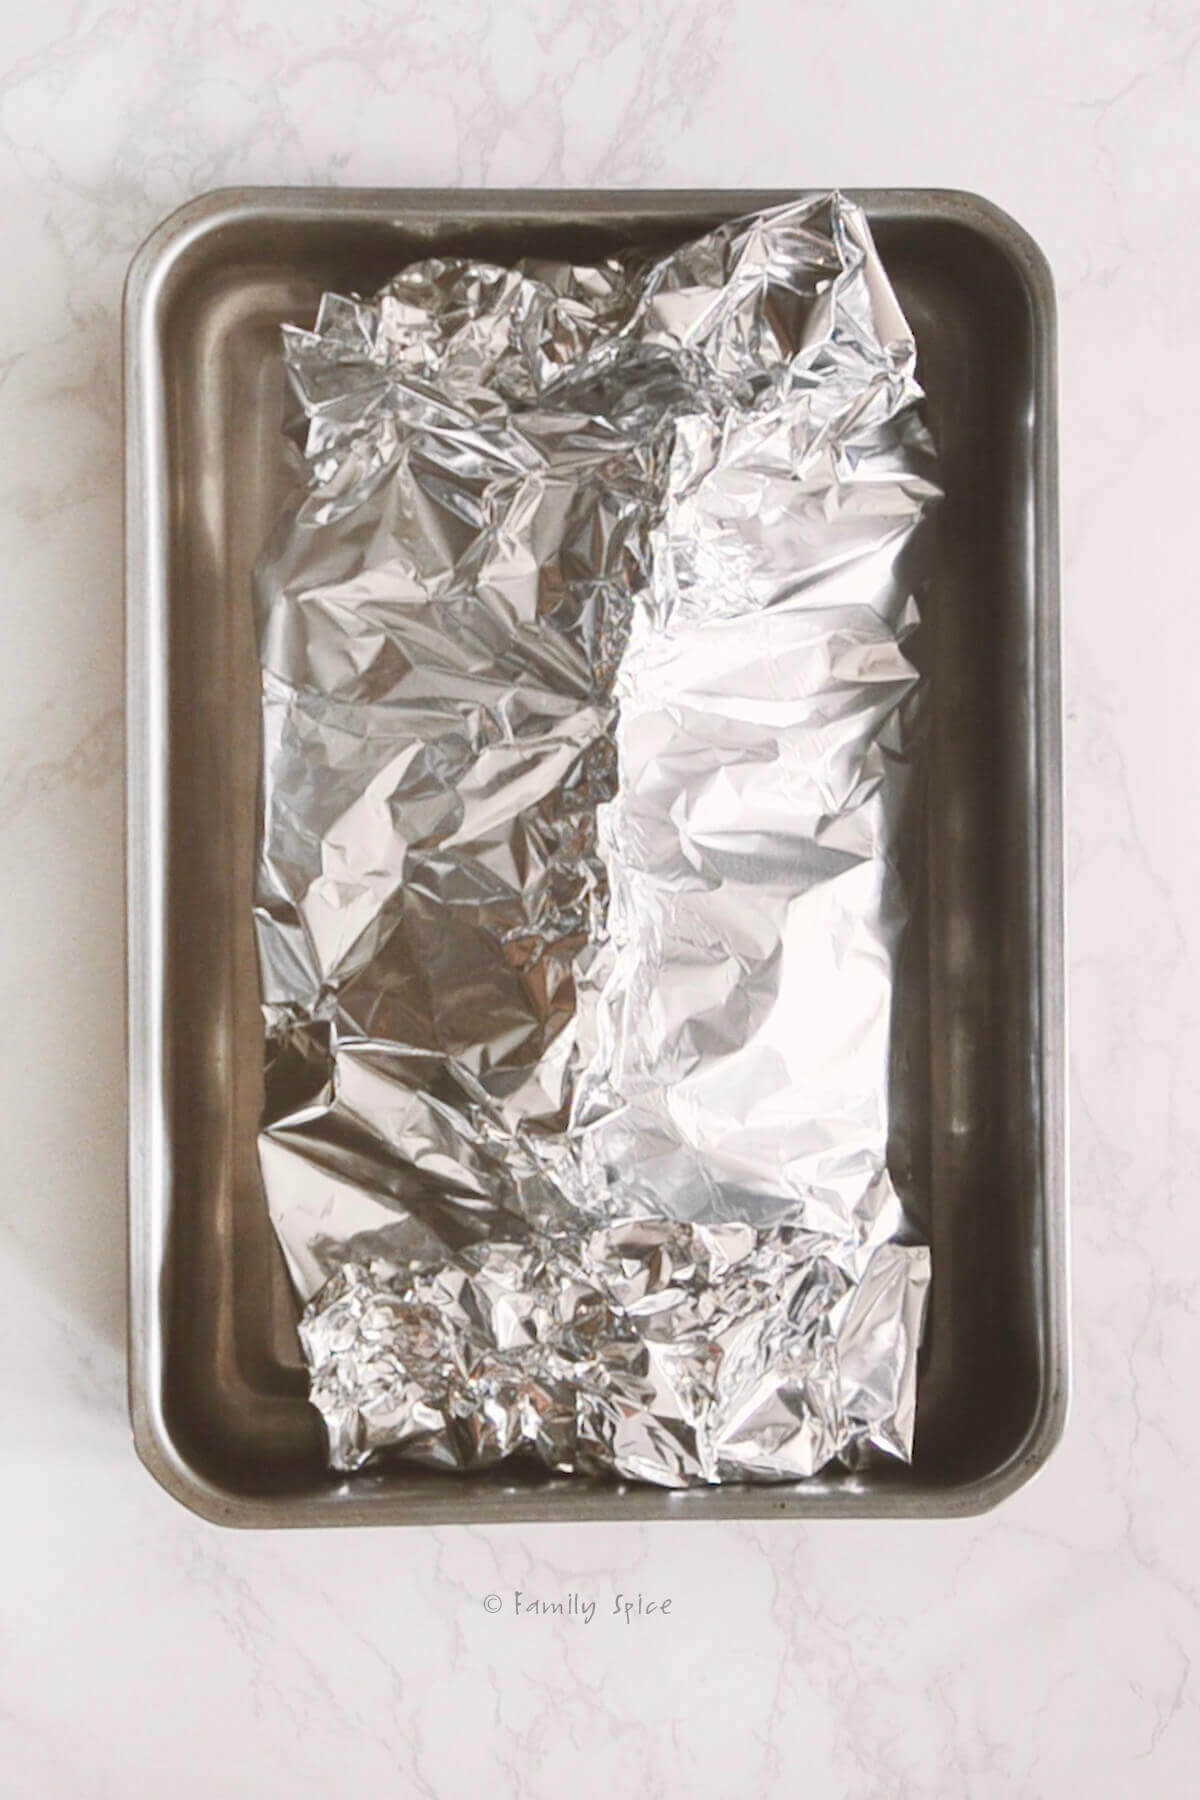 A corned beef roast wrapped in foil in a baking pan